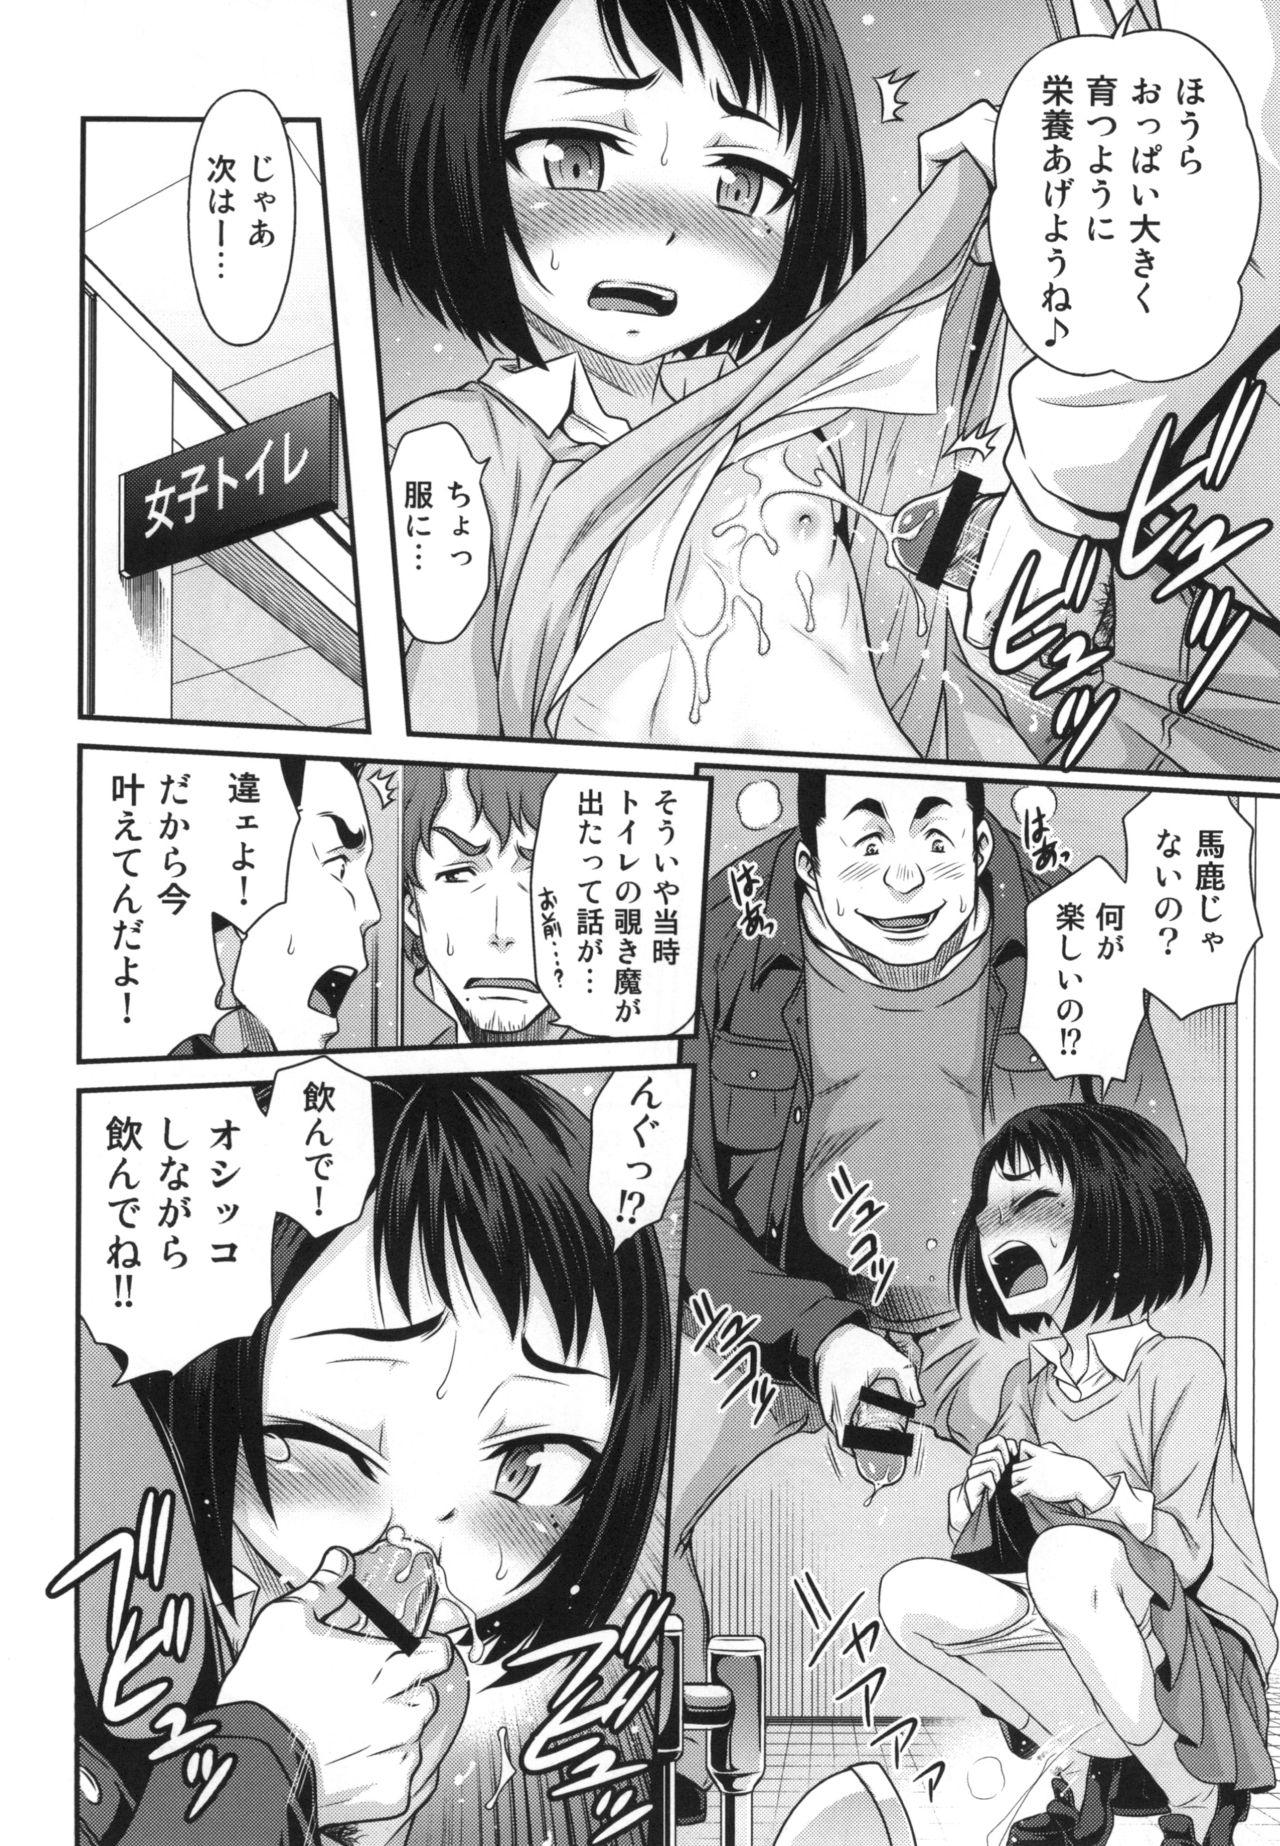 Ballbusting Erika no ChupaChupa Quest!! - Sakura quest Nalgas - Page 12